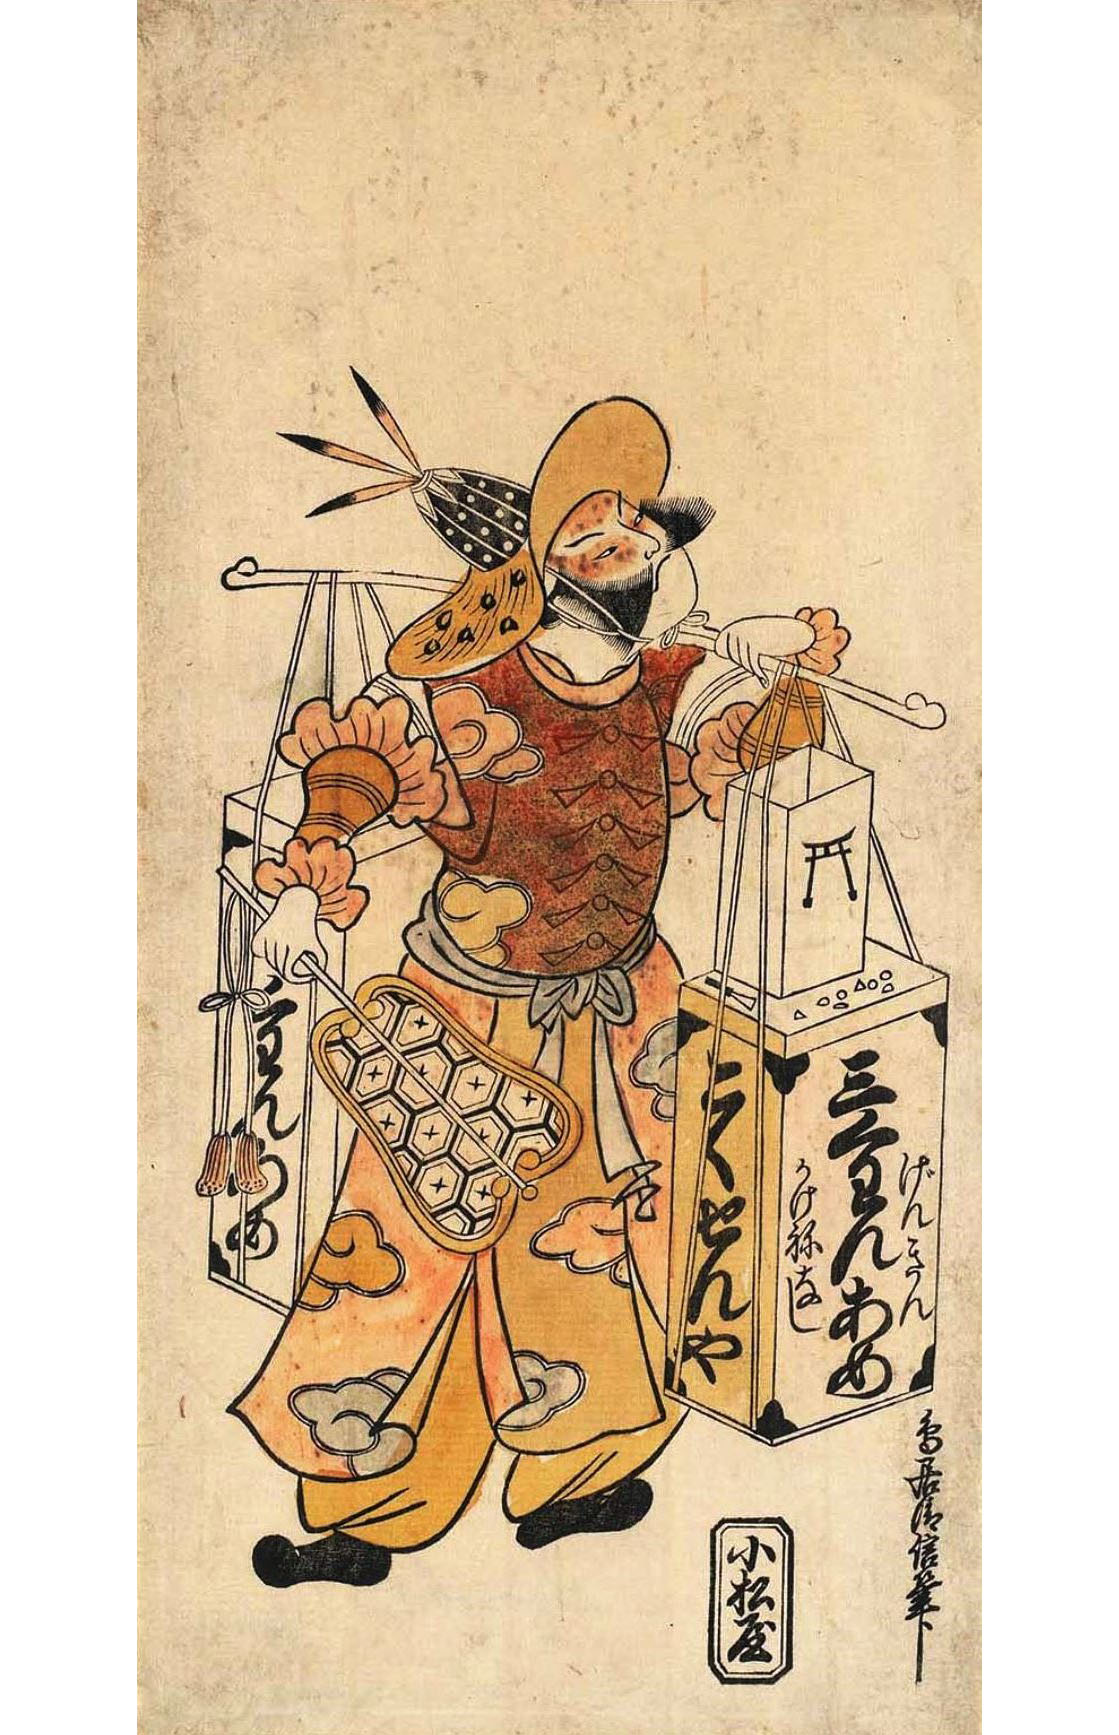 Тории Киёнобу I. "Актёр Отани Хиродзи в роли продавца конфет". Около 1717.